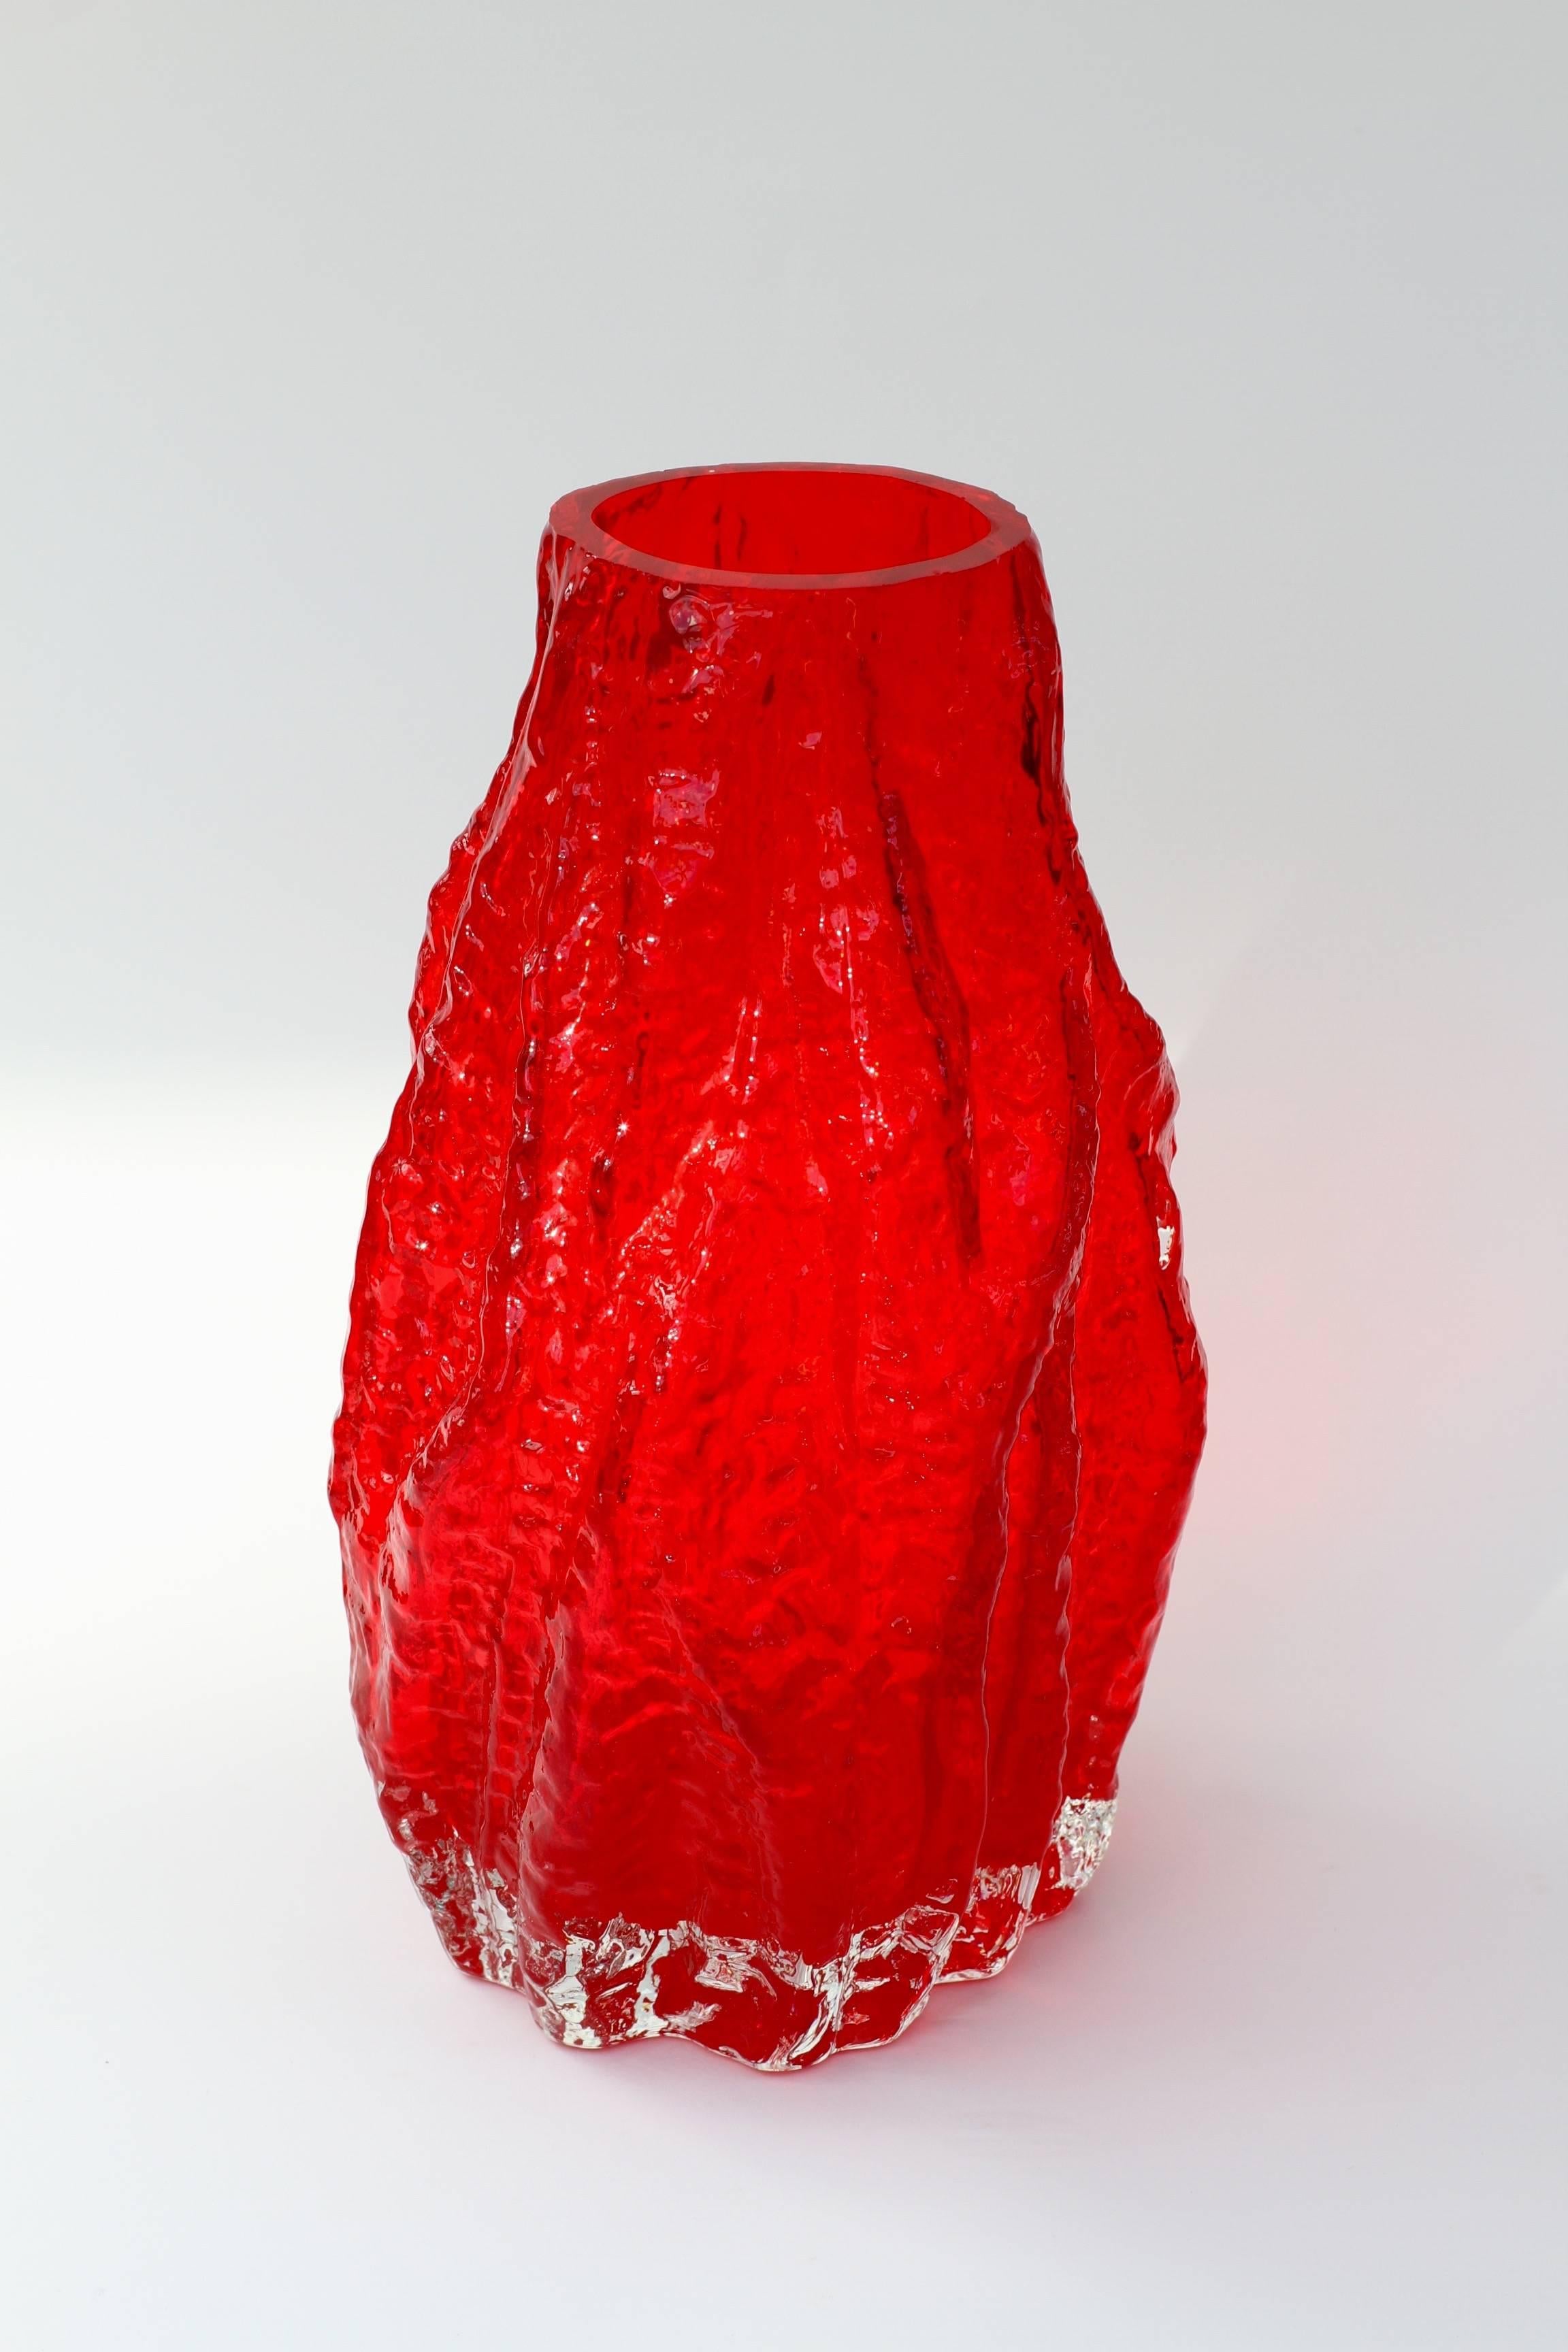 Molded Vintage German Vibrant Red Glass Tree Bark Vase by Ingrid Glas, circa 1970s For Sale